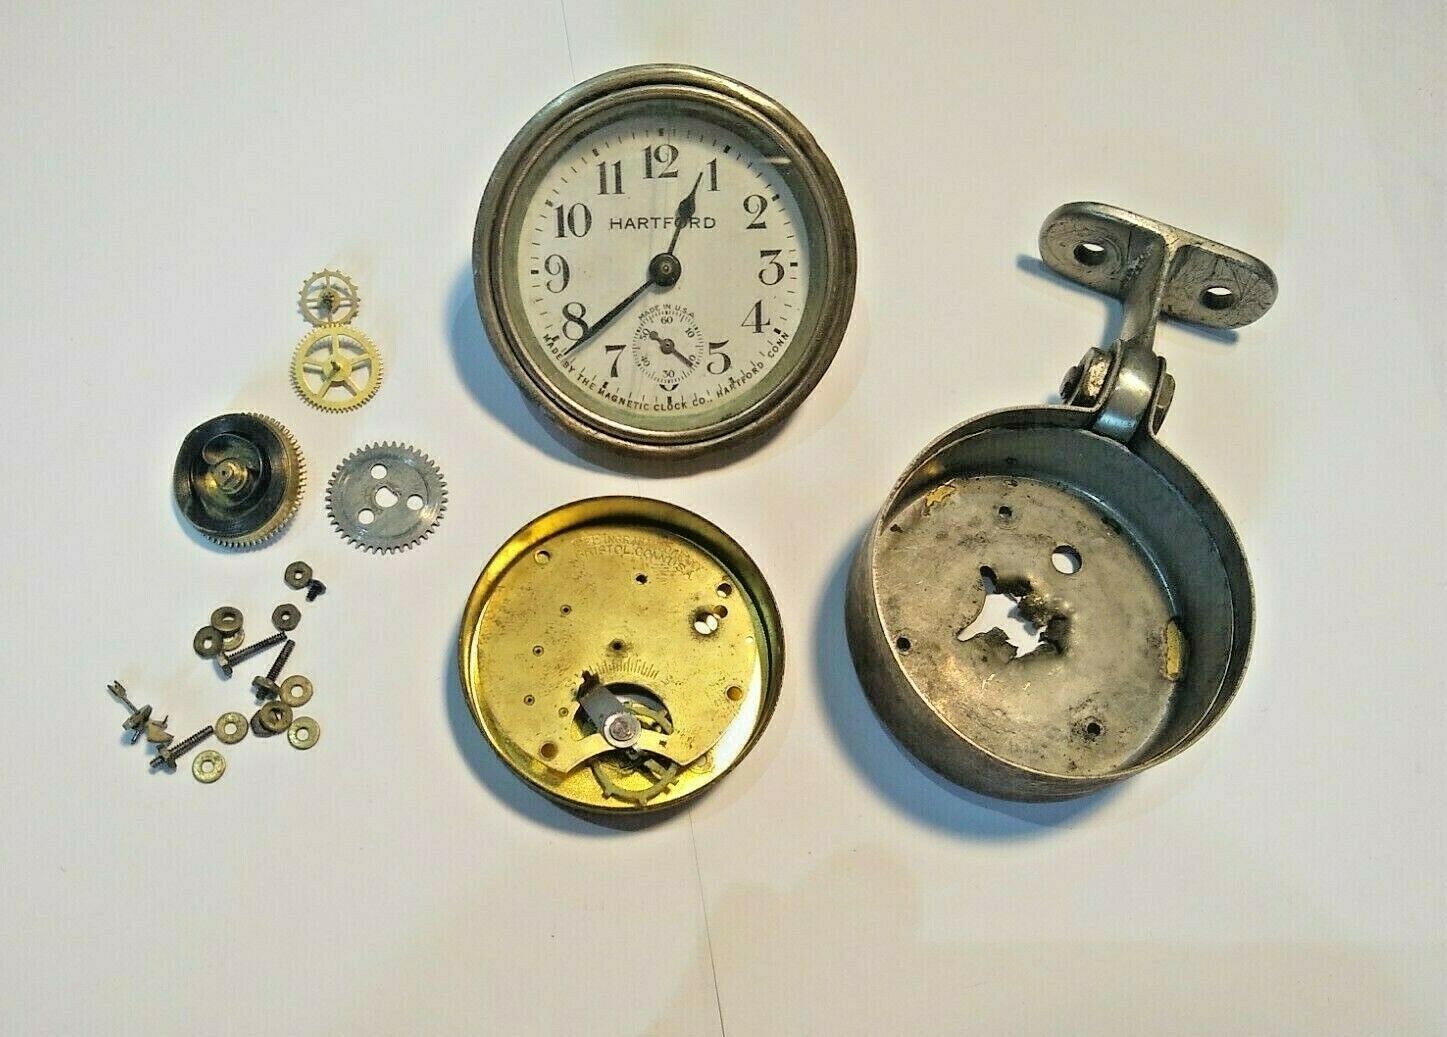 Antique Hartford Magnetic Clock Co - Automobile Ingraham Co Internals For Parts